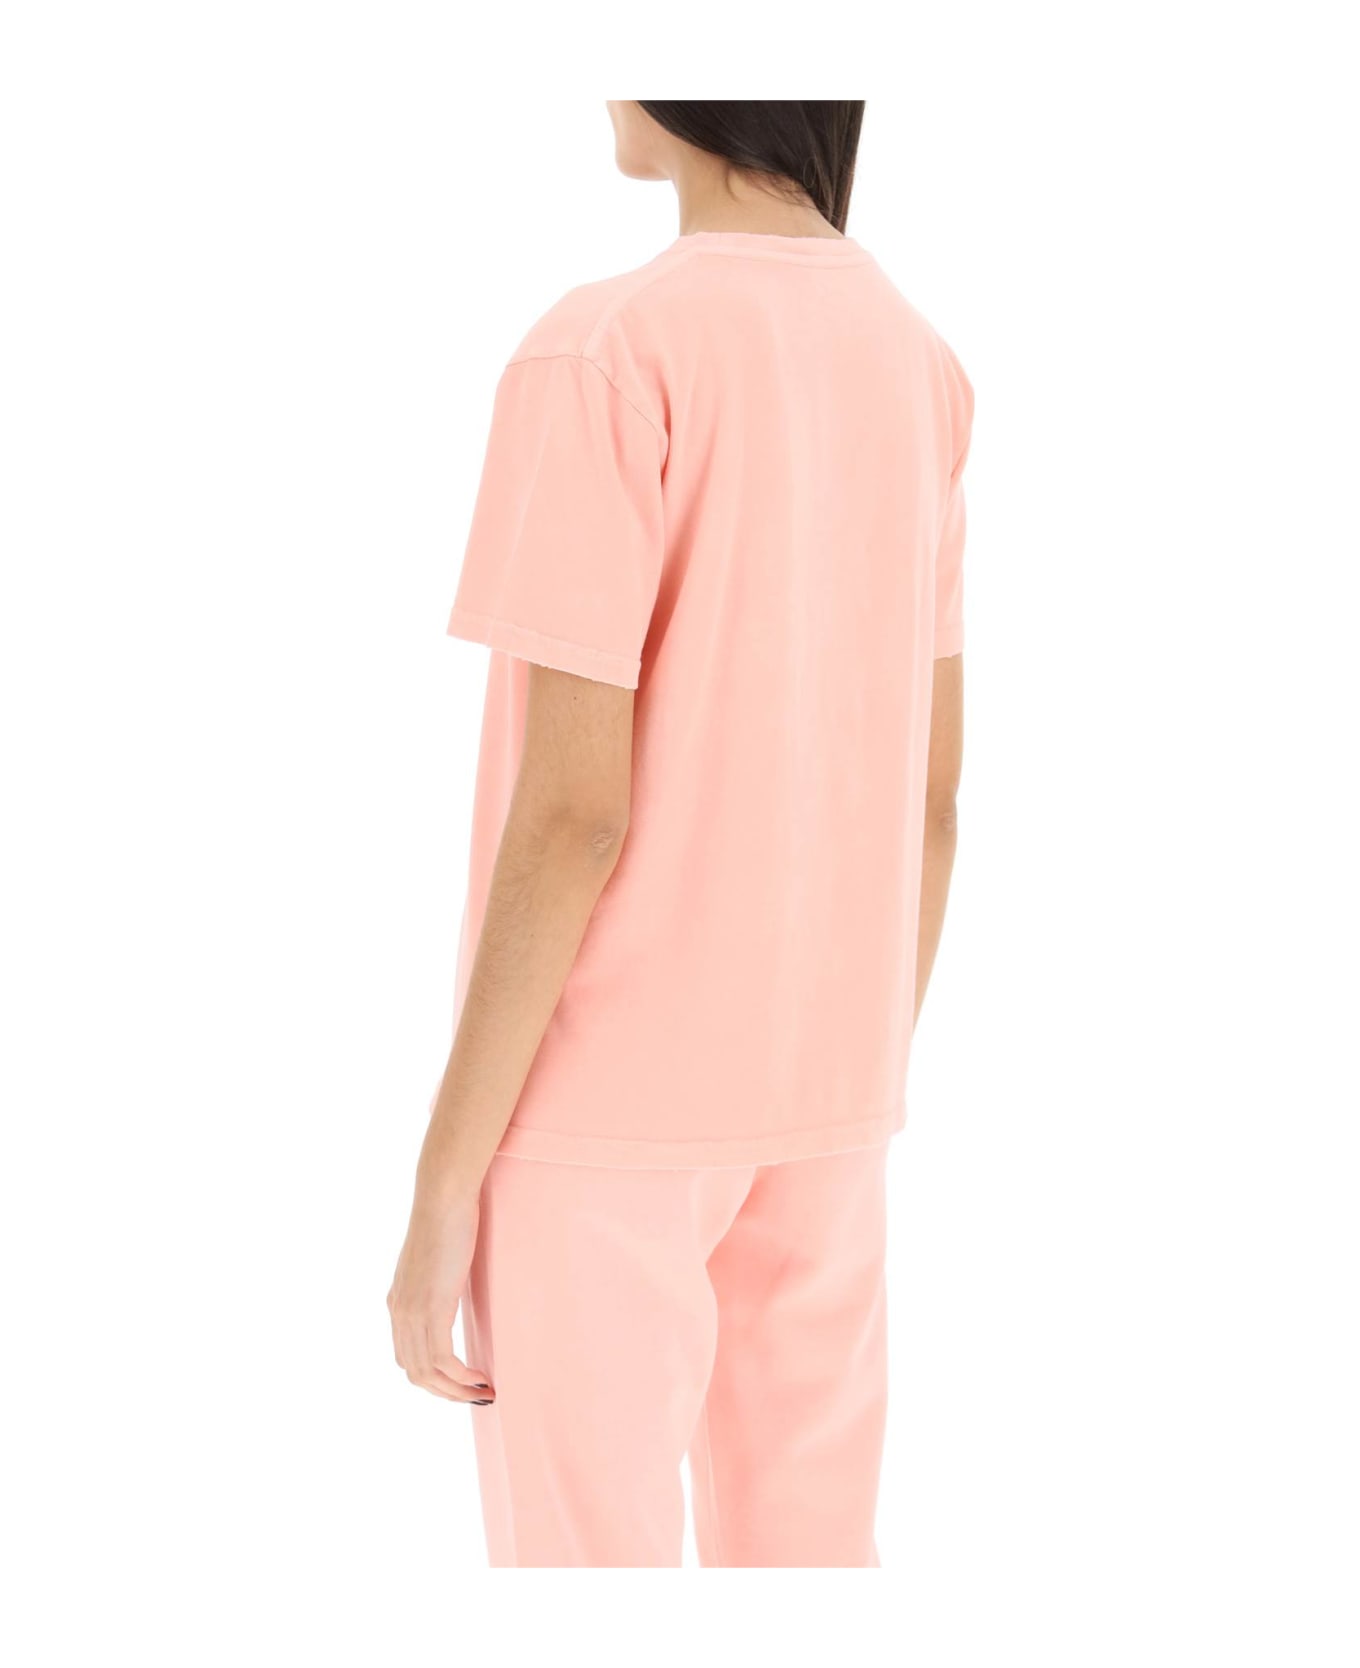 Autry Supervintage T-shirt - PINK (Pink)